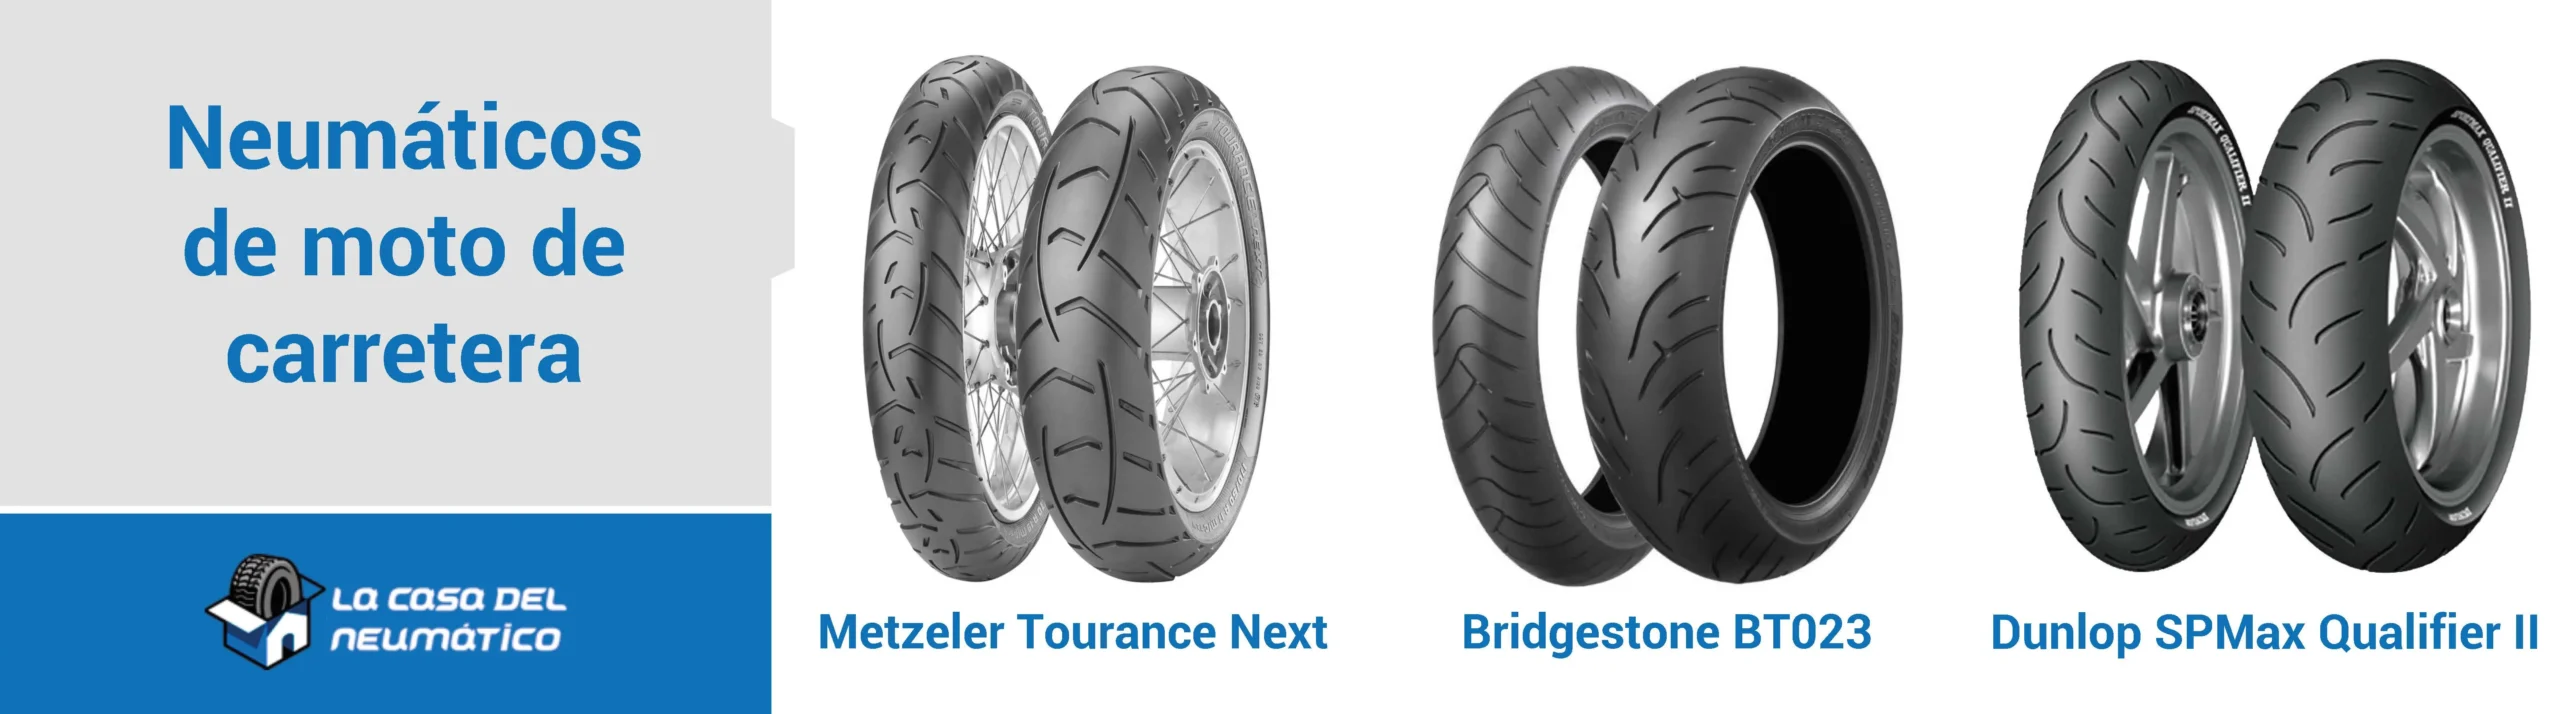 mejores neumáticos para moto carretera - Qué marca es mejor Dunlop o Pirelli